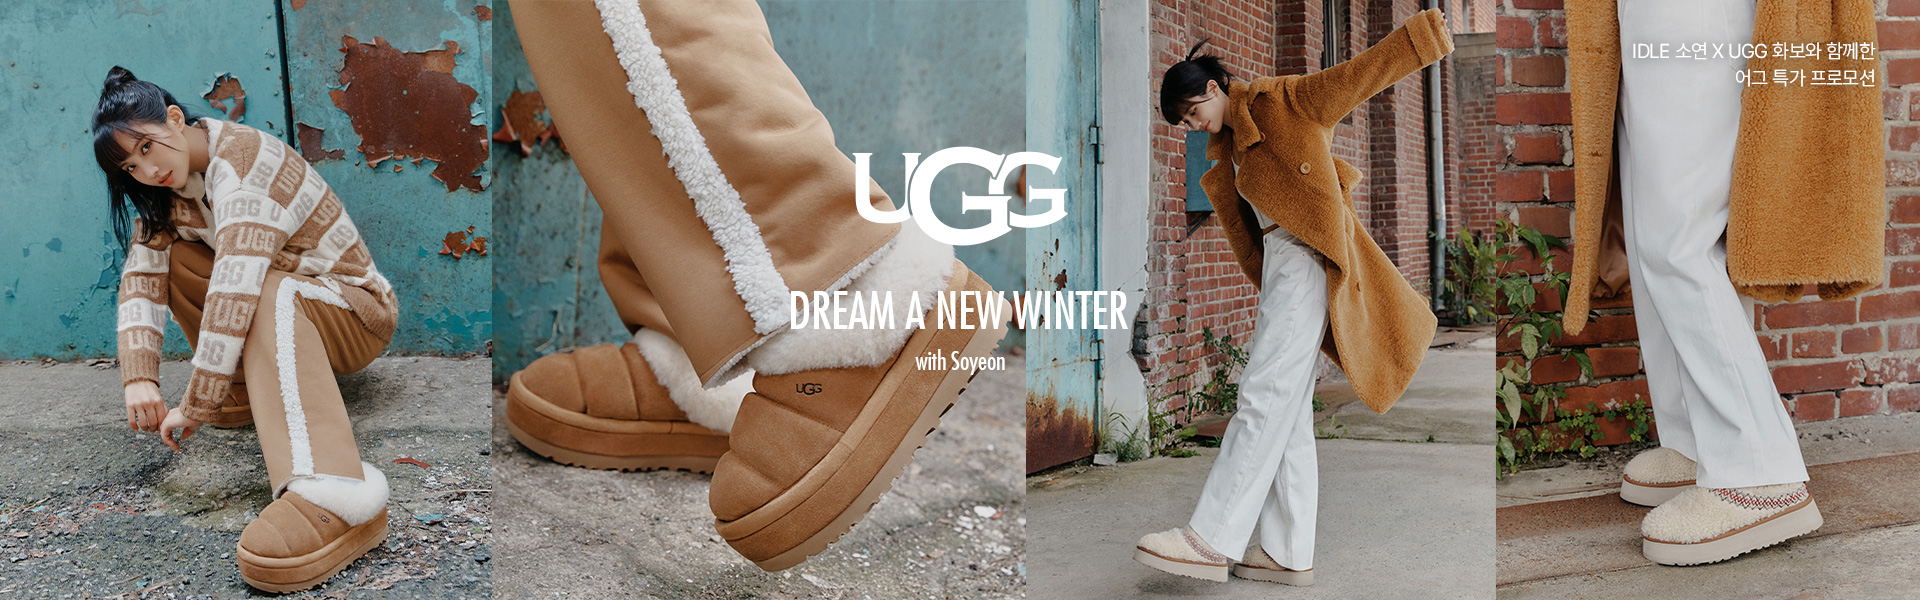 [PC]UGG X IDLE 소연, DREAM A NEW WINTER